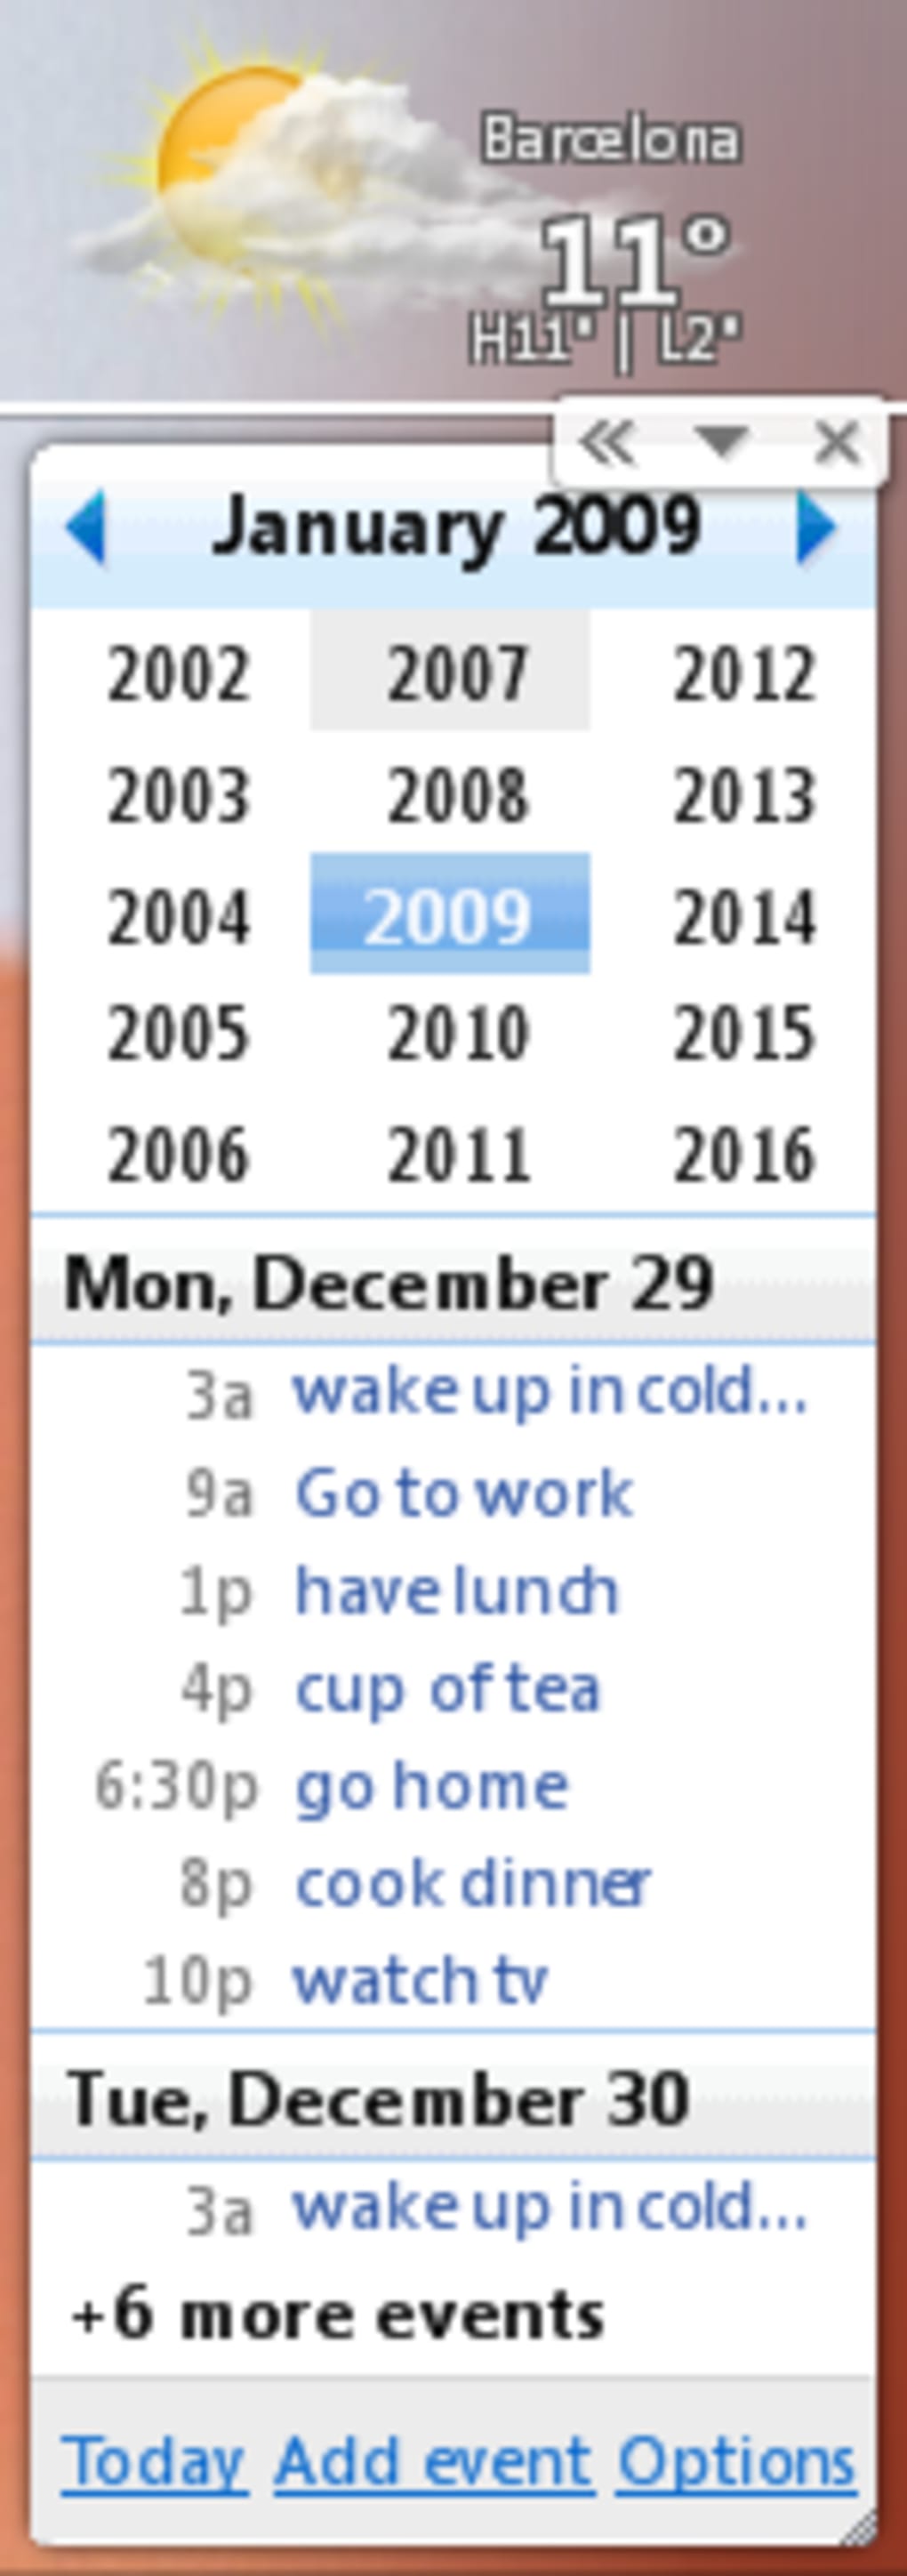 google calendar app for windows 10 download